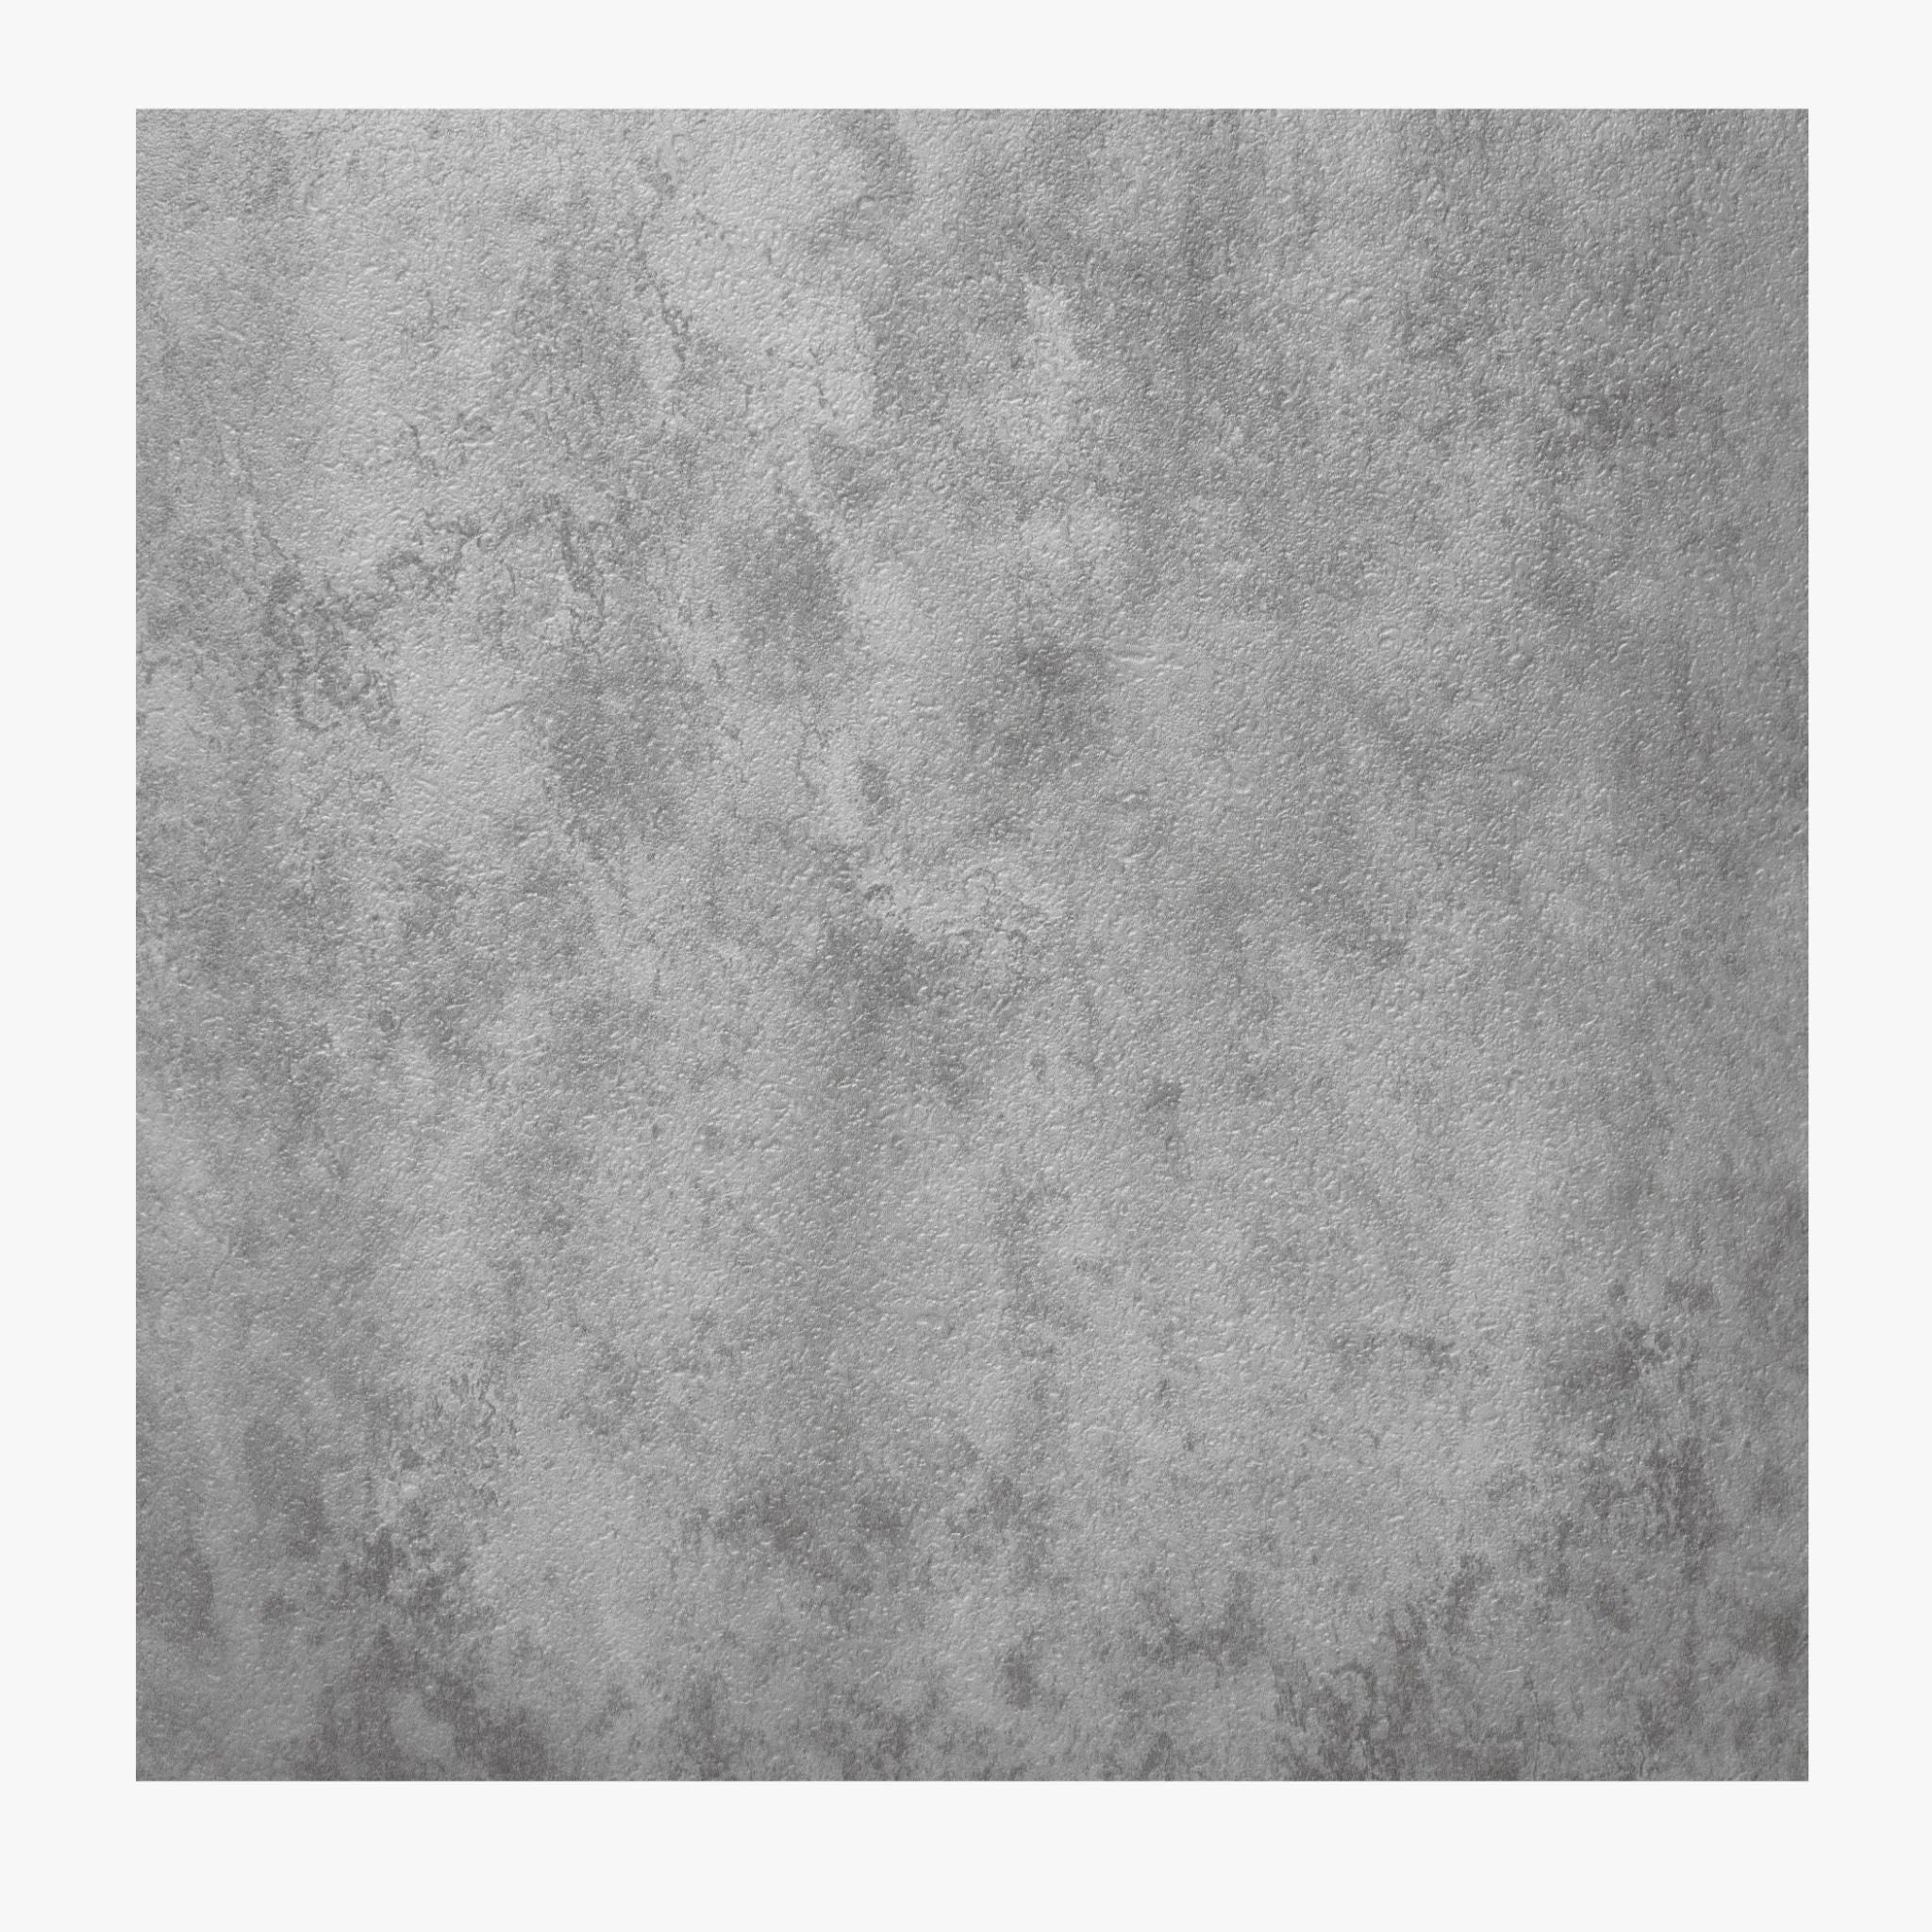 detailed view of grey tile-effect concrete flooring with subtle grain patterns